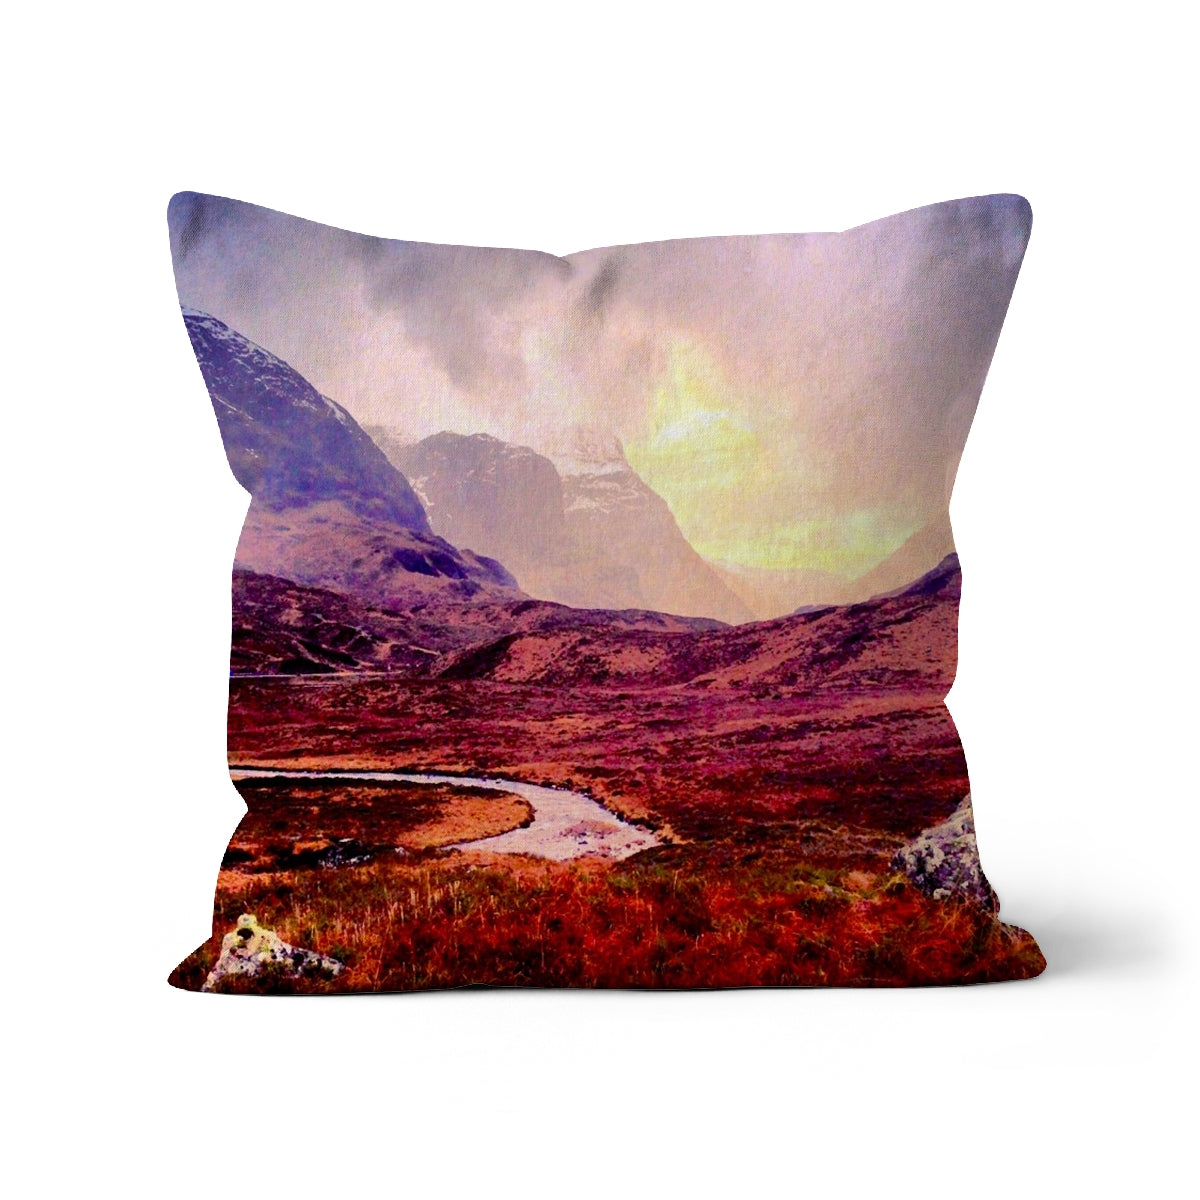 A Brooding Glencoe Art Gifts Cushion-Cushions-Glencoe Art Gallery-Canvas-22"x22"-Paintings, Prints, Homeware, Art Gifts From Scotland By Scottish Artist Kevin Hunter